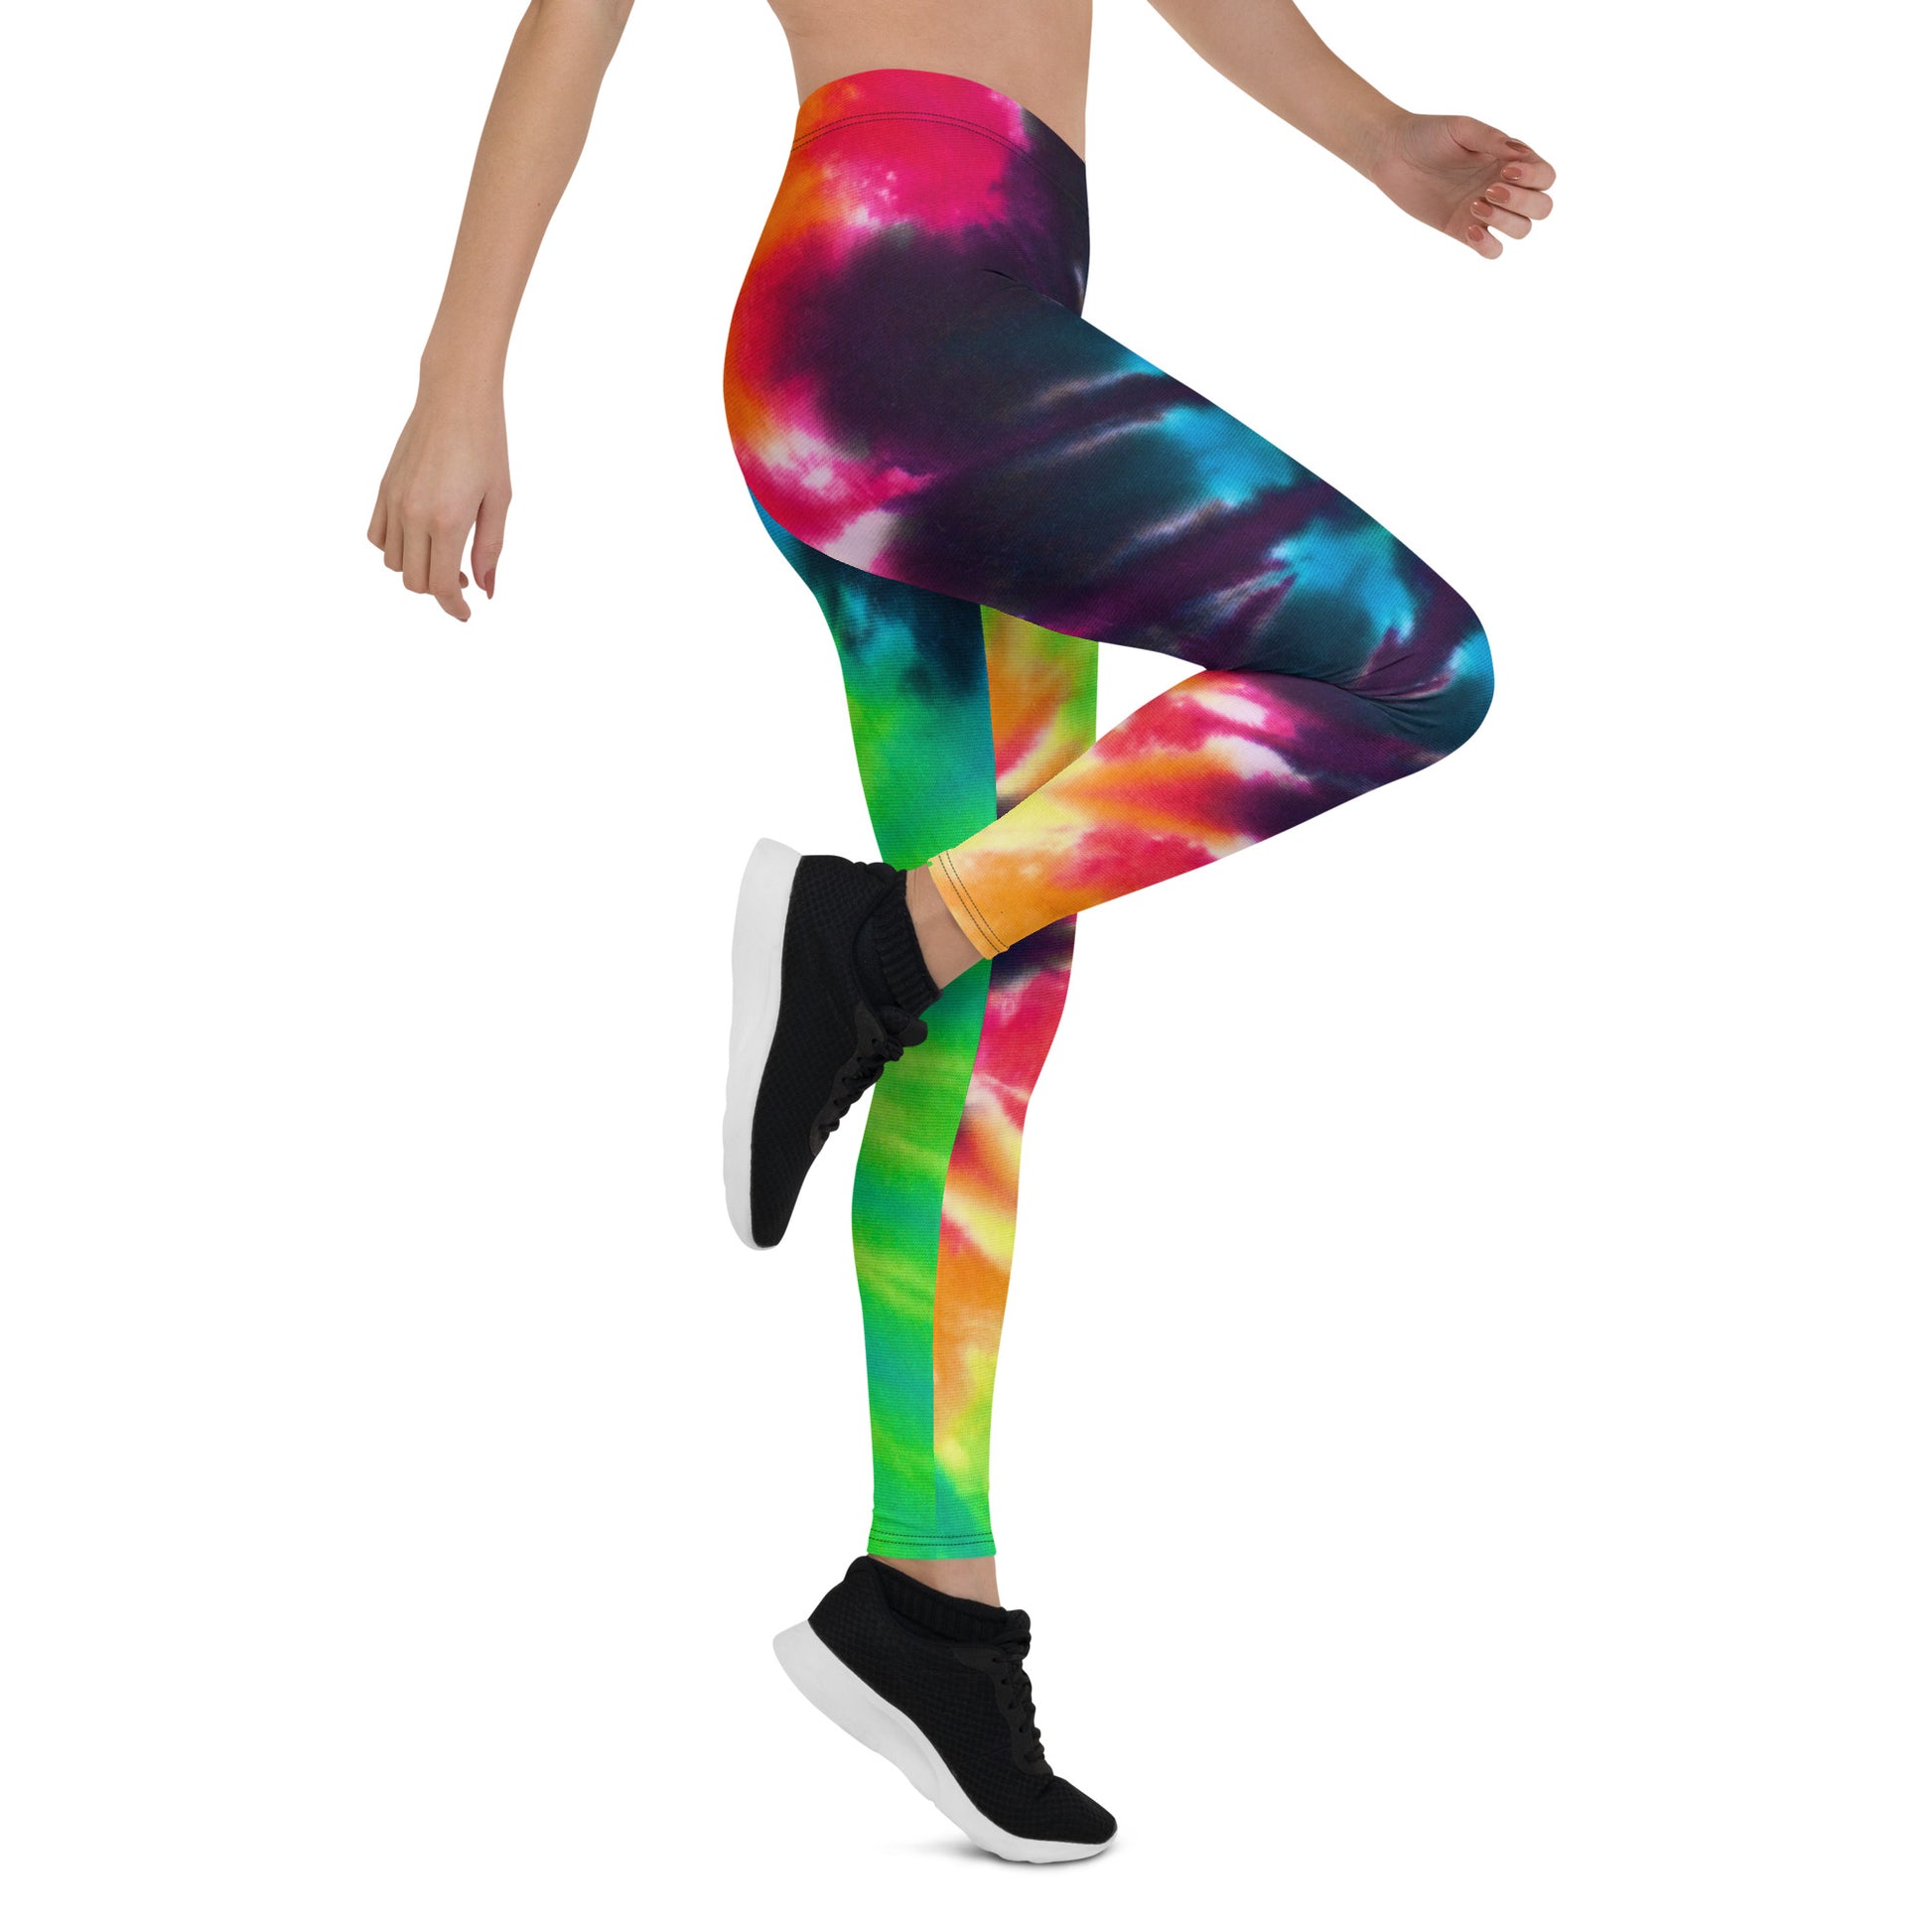 Tie Dye Leggings Women, Spiral Printed Yoga Pants Cute Graphic Workout Running Gym Fun Designer Tights Gift Starcove Fashion